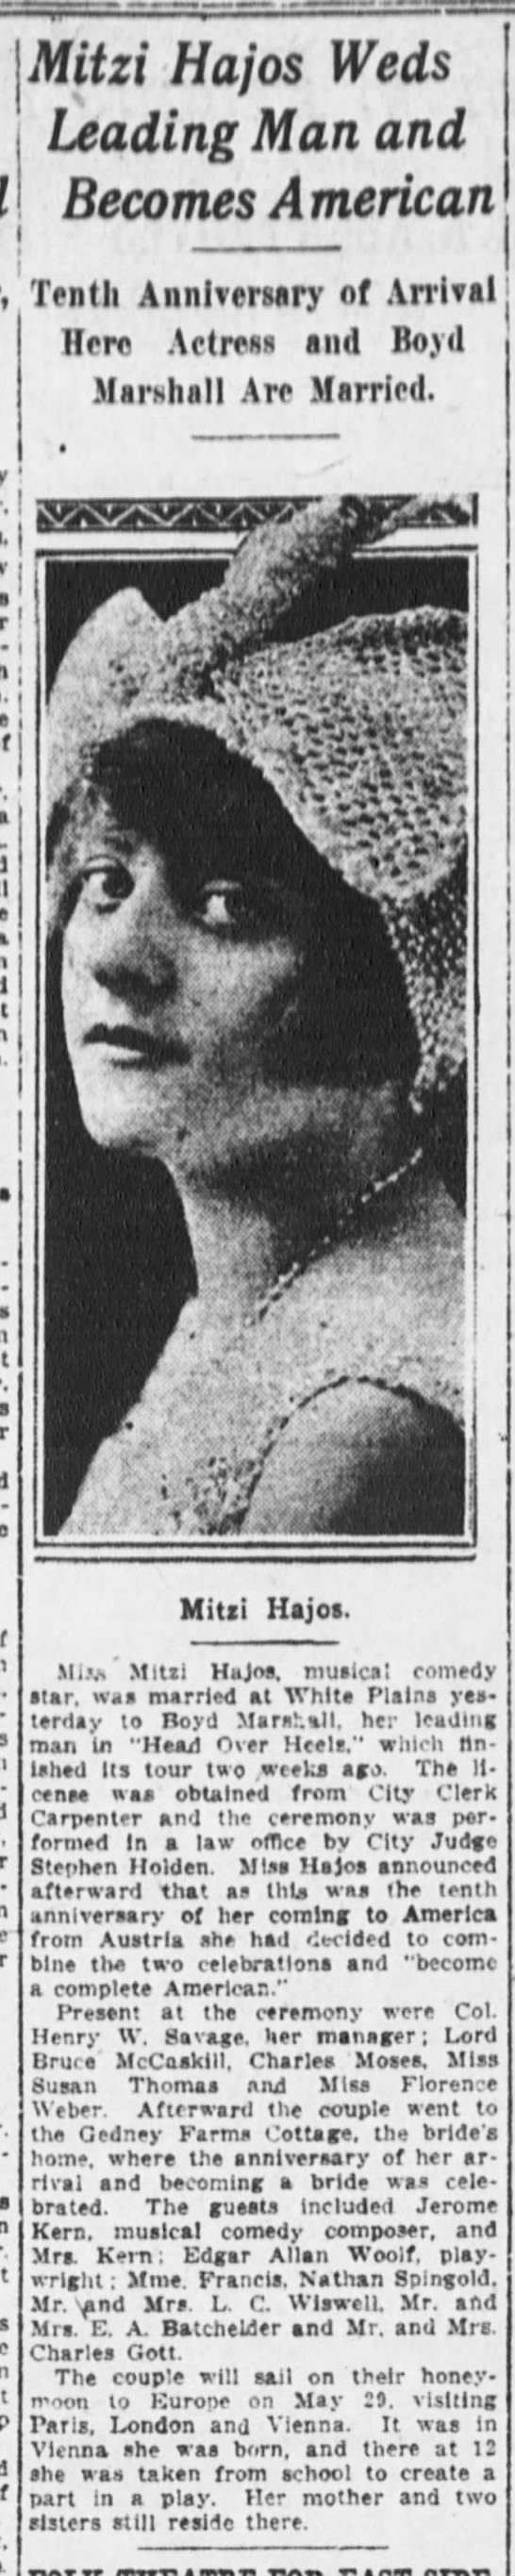 Mitzi Hajos weds, becomes US citizen (1920) - 